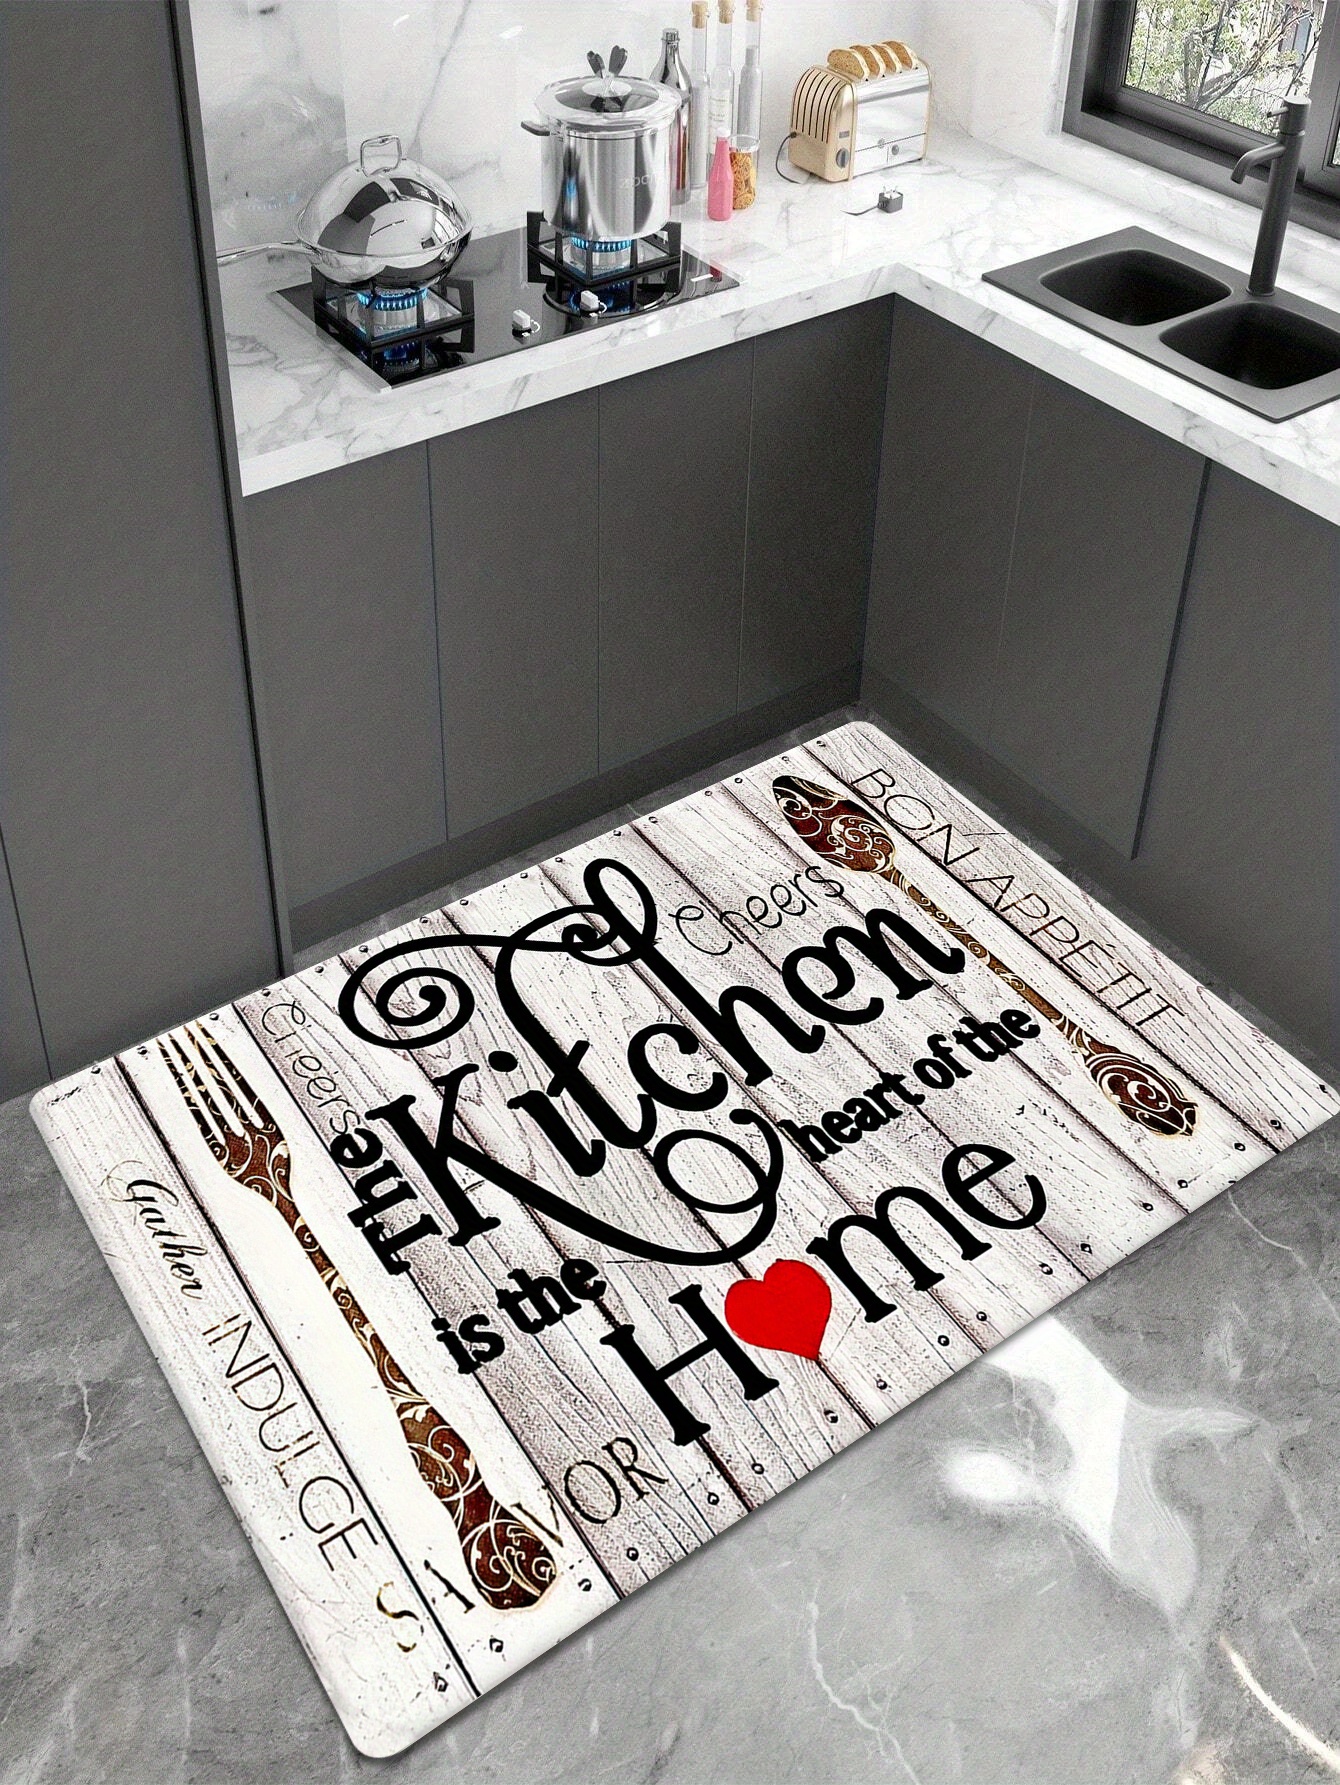 Hot Sale Oilproof Kitchen Mat Modern Cabinet Floor Mats Home Refrigerator  Floormat Bathroom Doormat Bathe Bathtub Anti-Slip Rugs